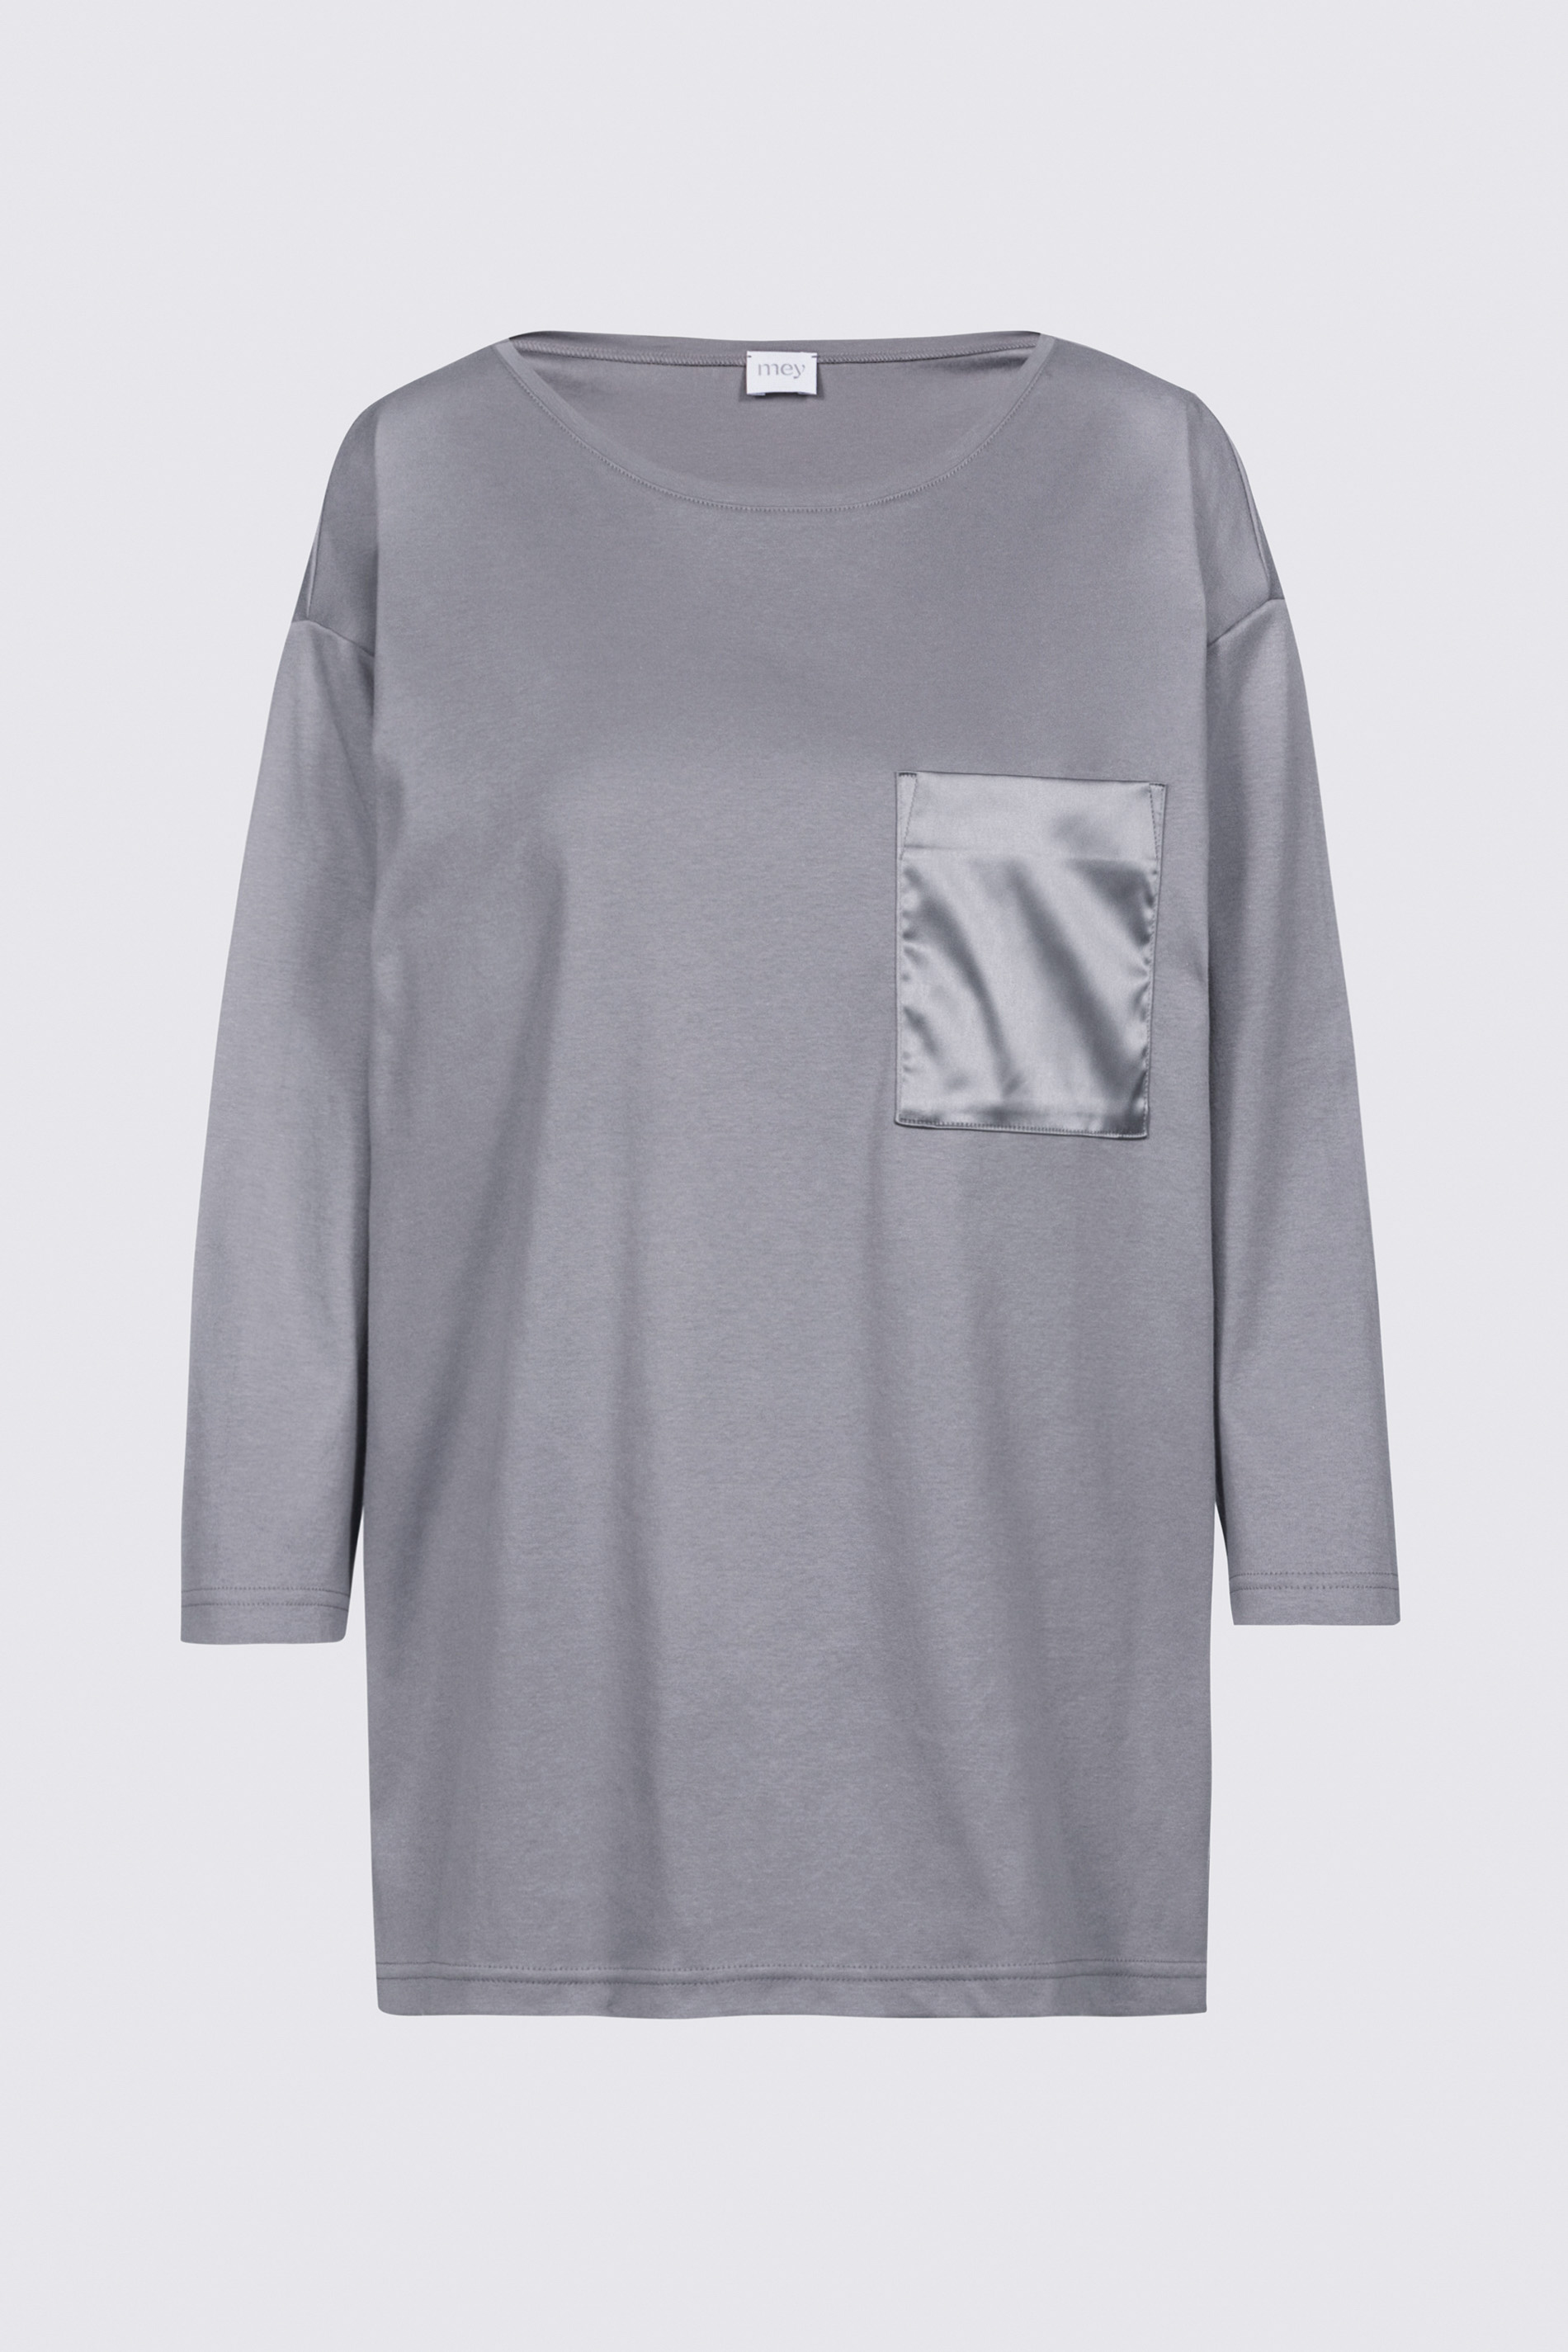 Shirt Lovely Grey Serie Sleepsation Uitknippen | mey®